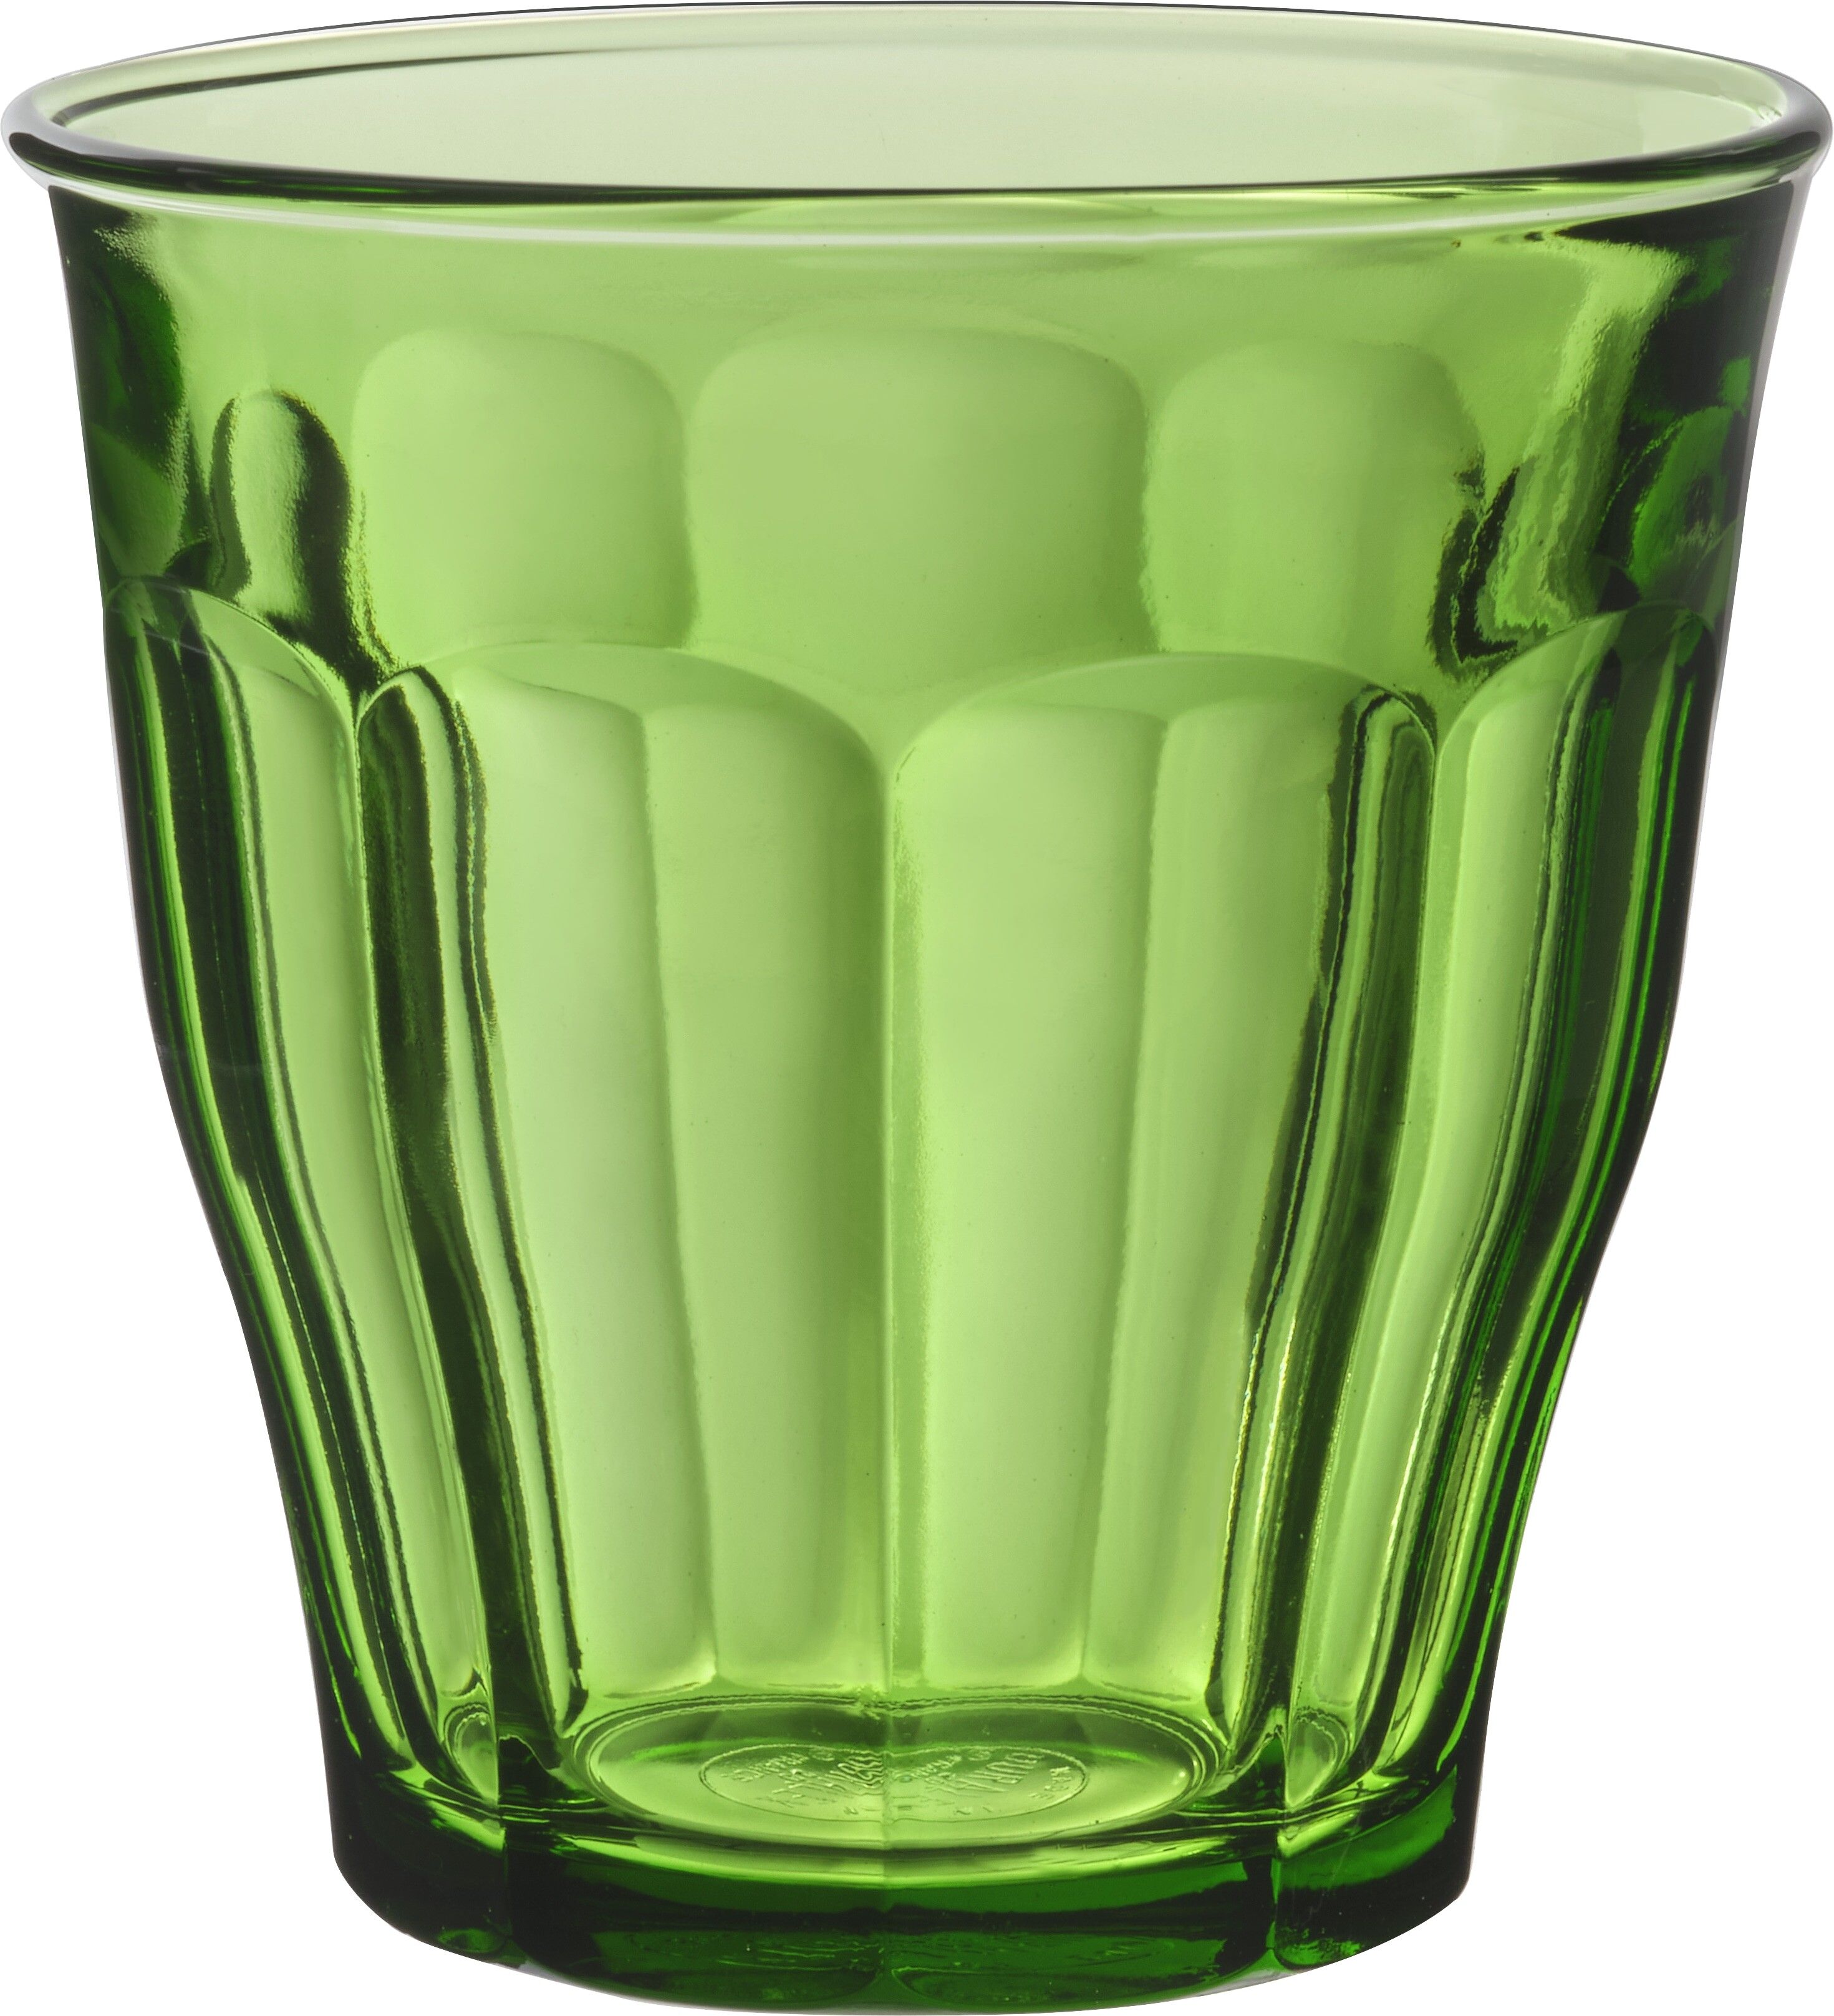 Стакан с зеленой водой. Стаканы Duralex Picardie 130мл. Набор стаканов Manhattan прозрачные 6шт 310мл Duralex 1057ab06a0111. Стакан Greenmaster су260. Набор альтернатива 10 стаканчиков зеленый цвет.